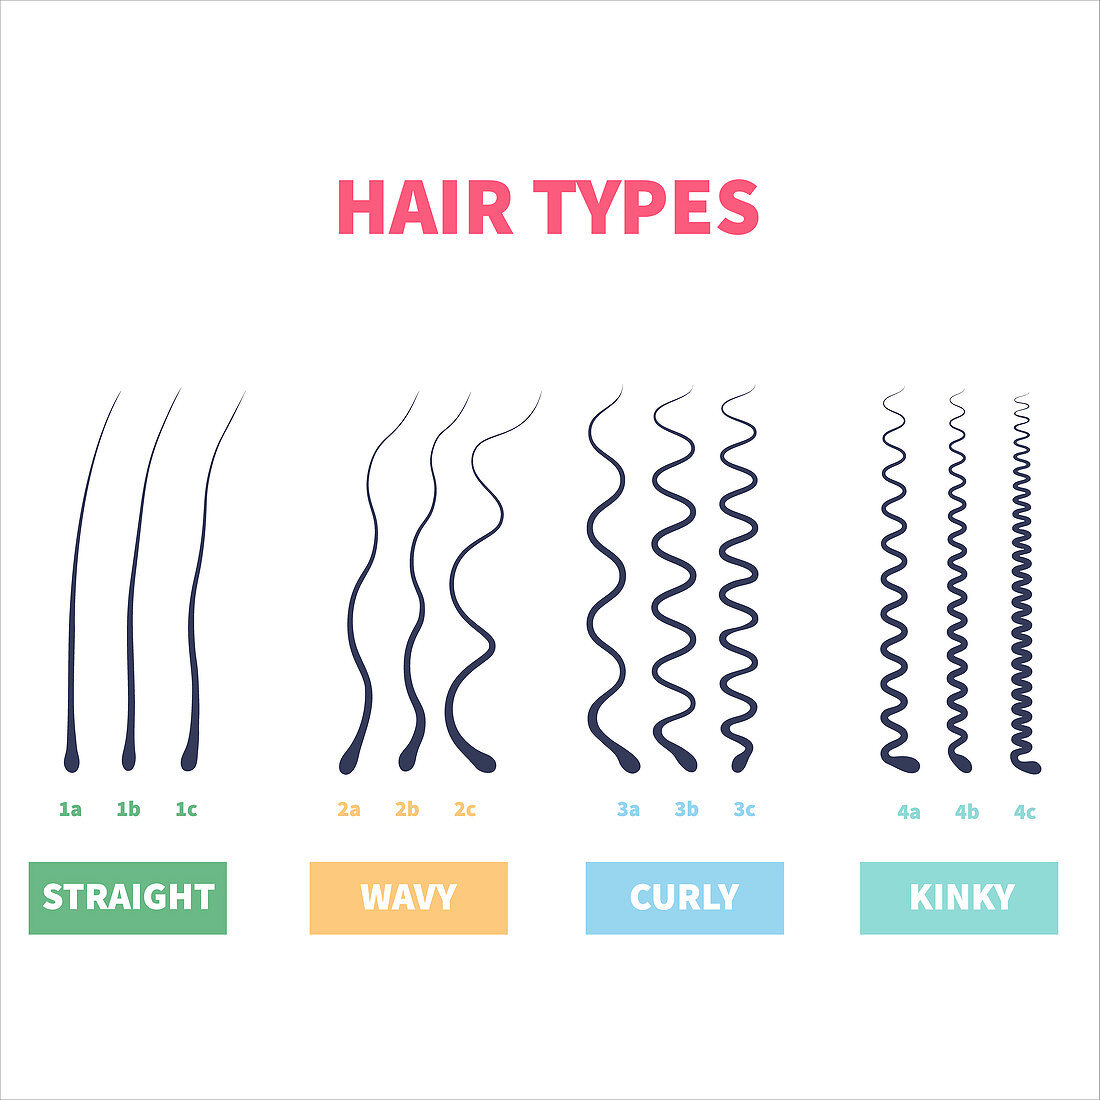 Hair types, illustration